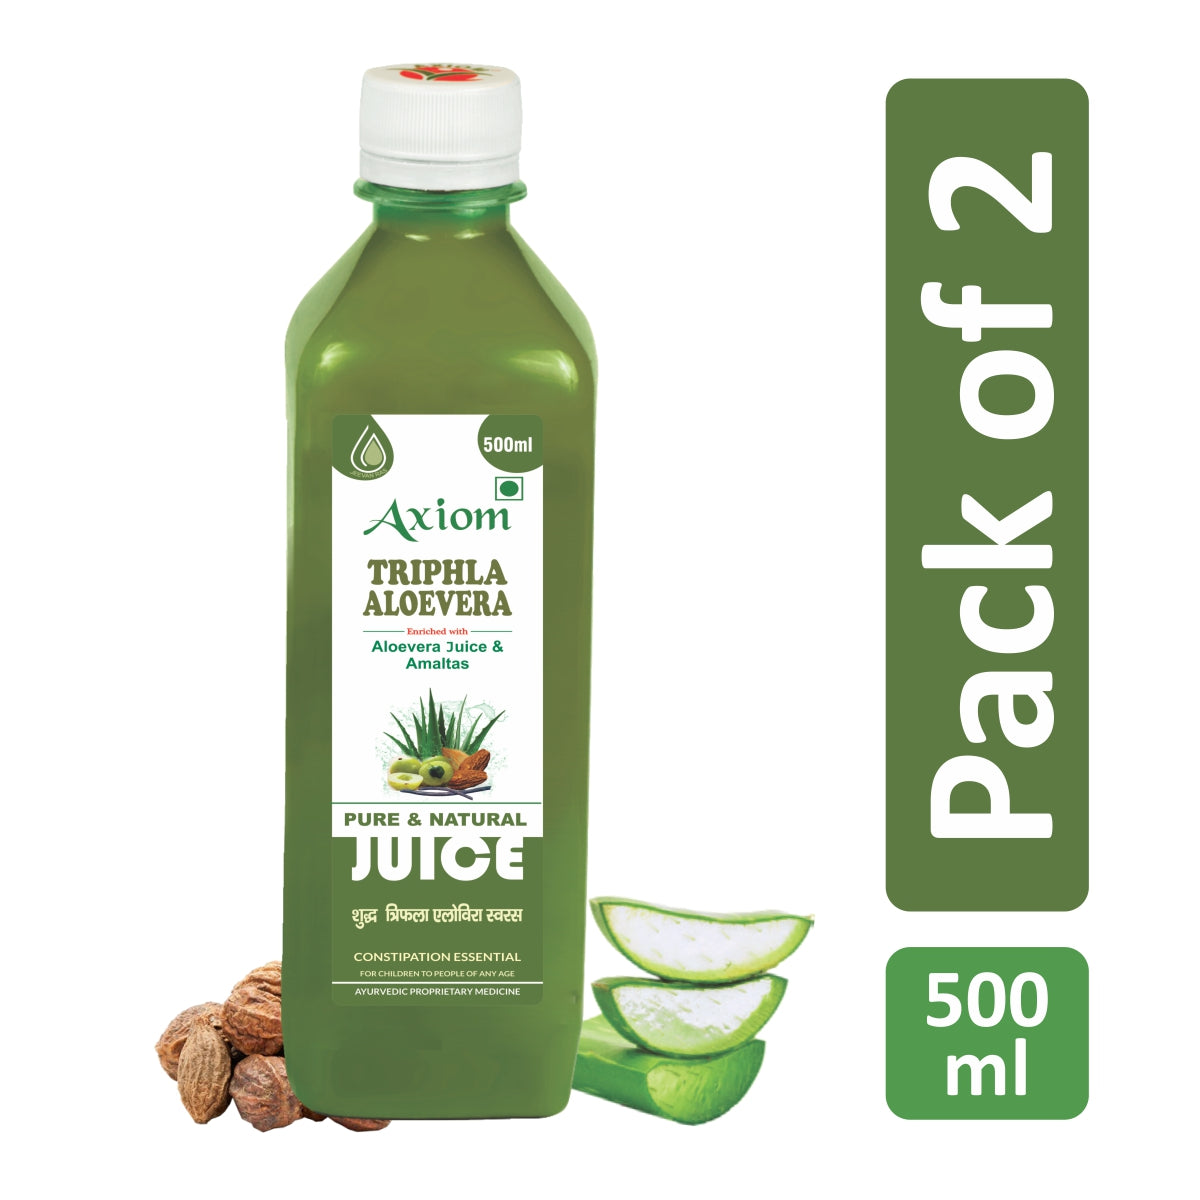 Triphla Aloevera Juice 500ml